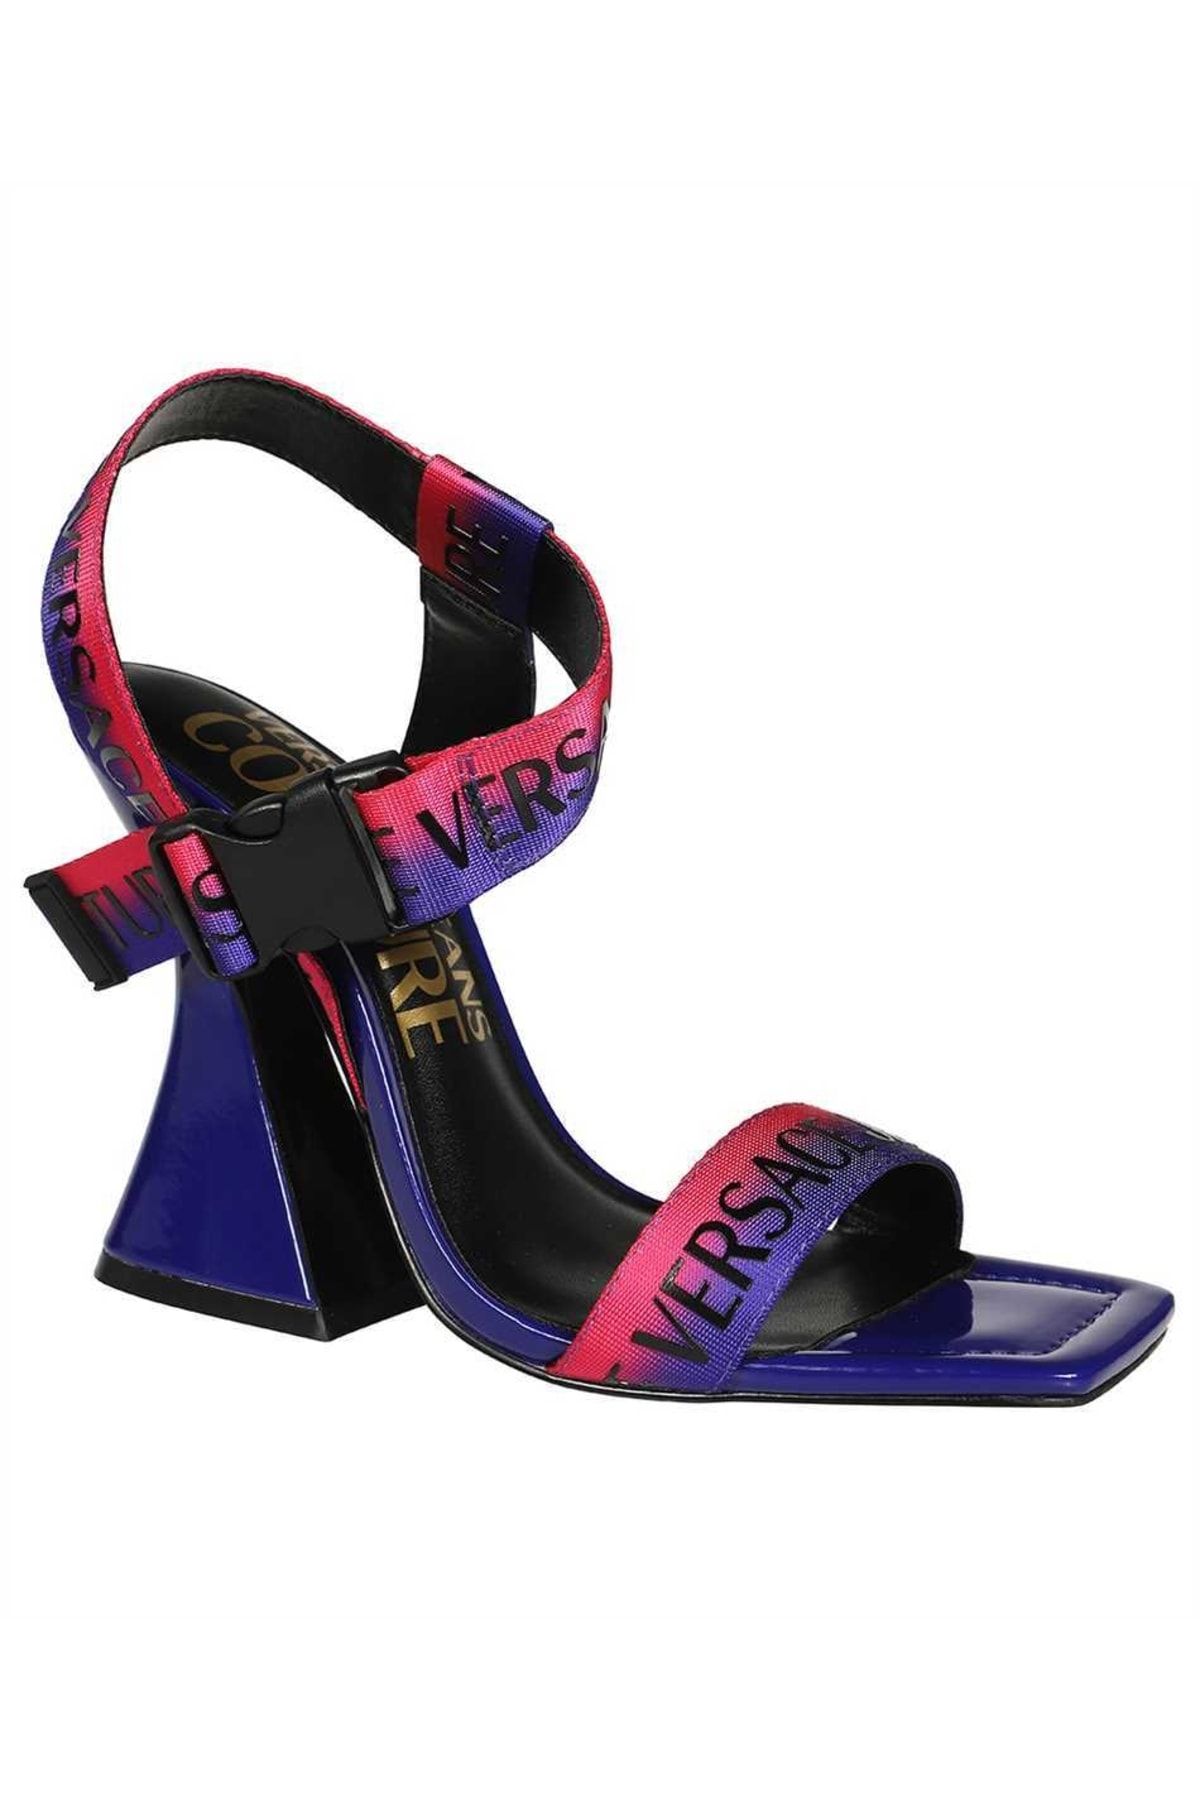 Versace Kadın Yüksek Topuklu Rahat Logolu Pembe Klasik Topuklu Ayakkabı 74va3s38 Zs595-pw8